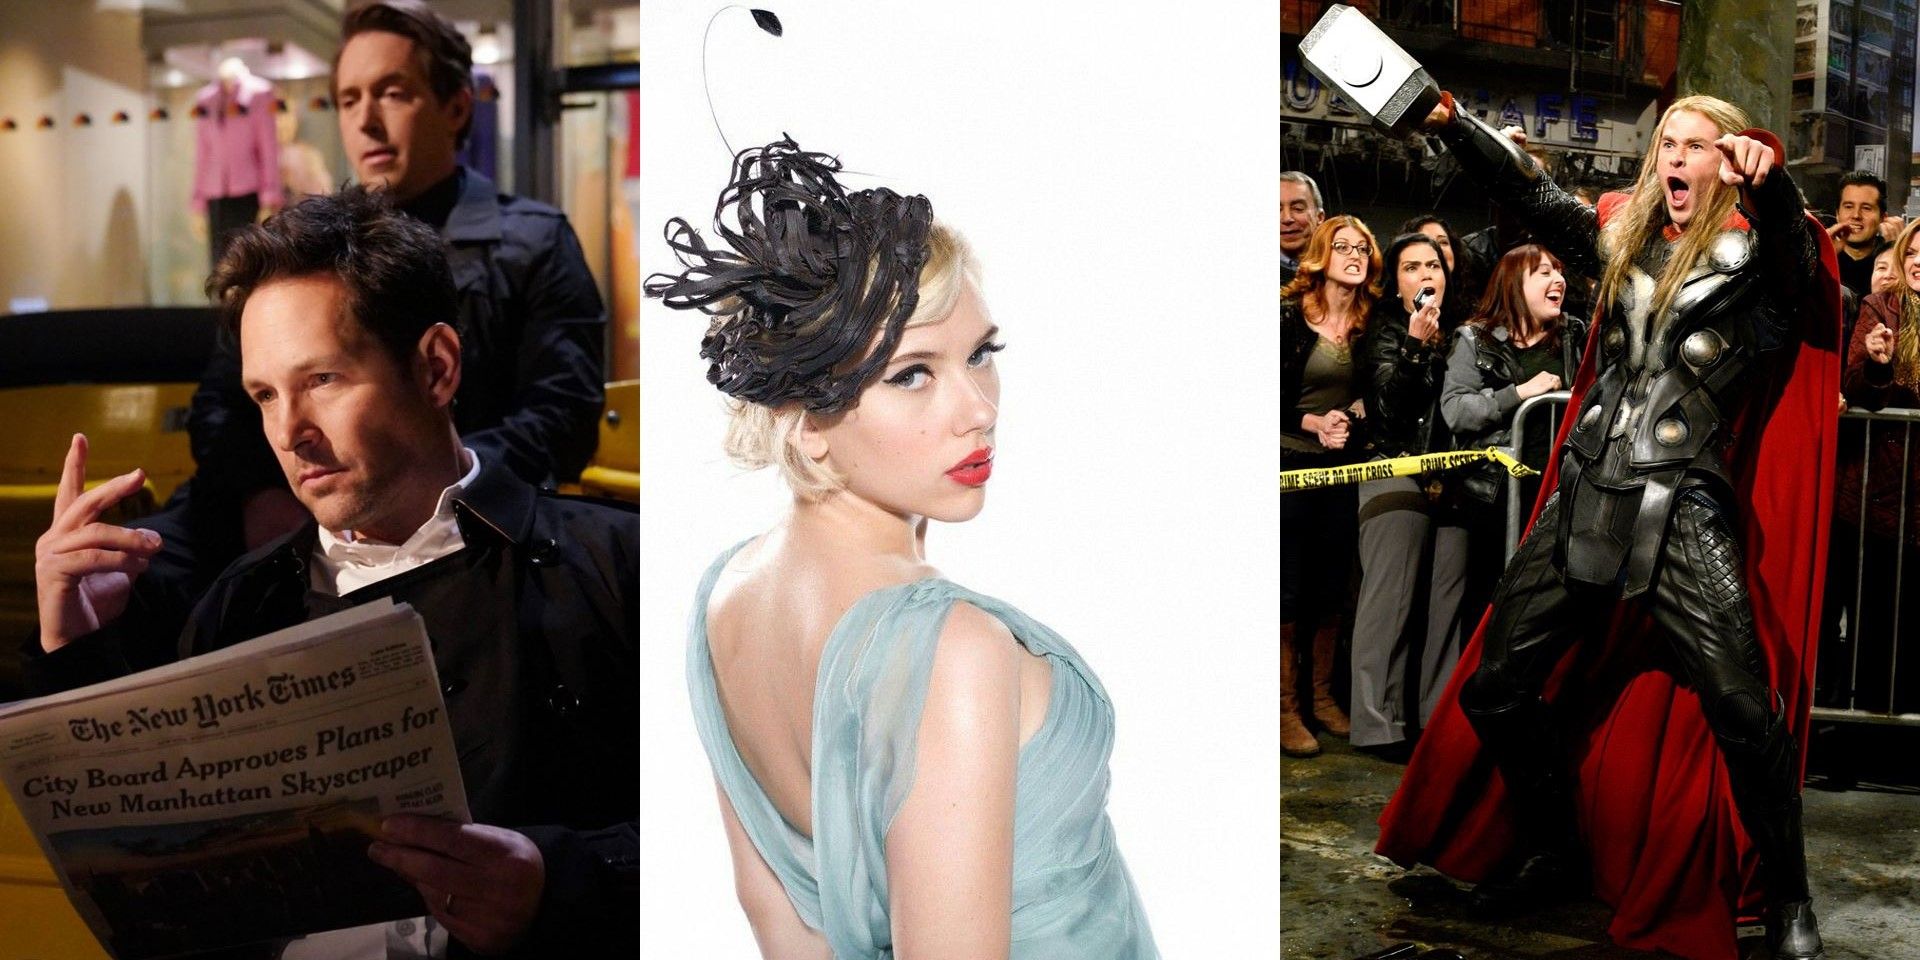 Paul Rudd, Scarlett Johansson, and Chris Hemsworth